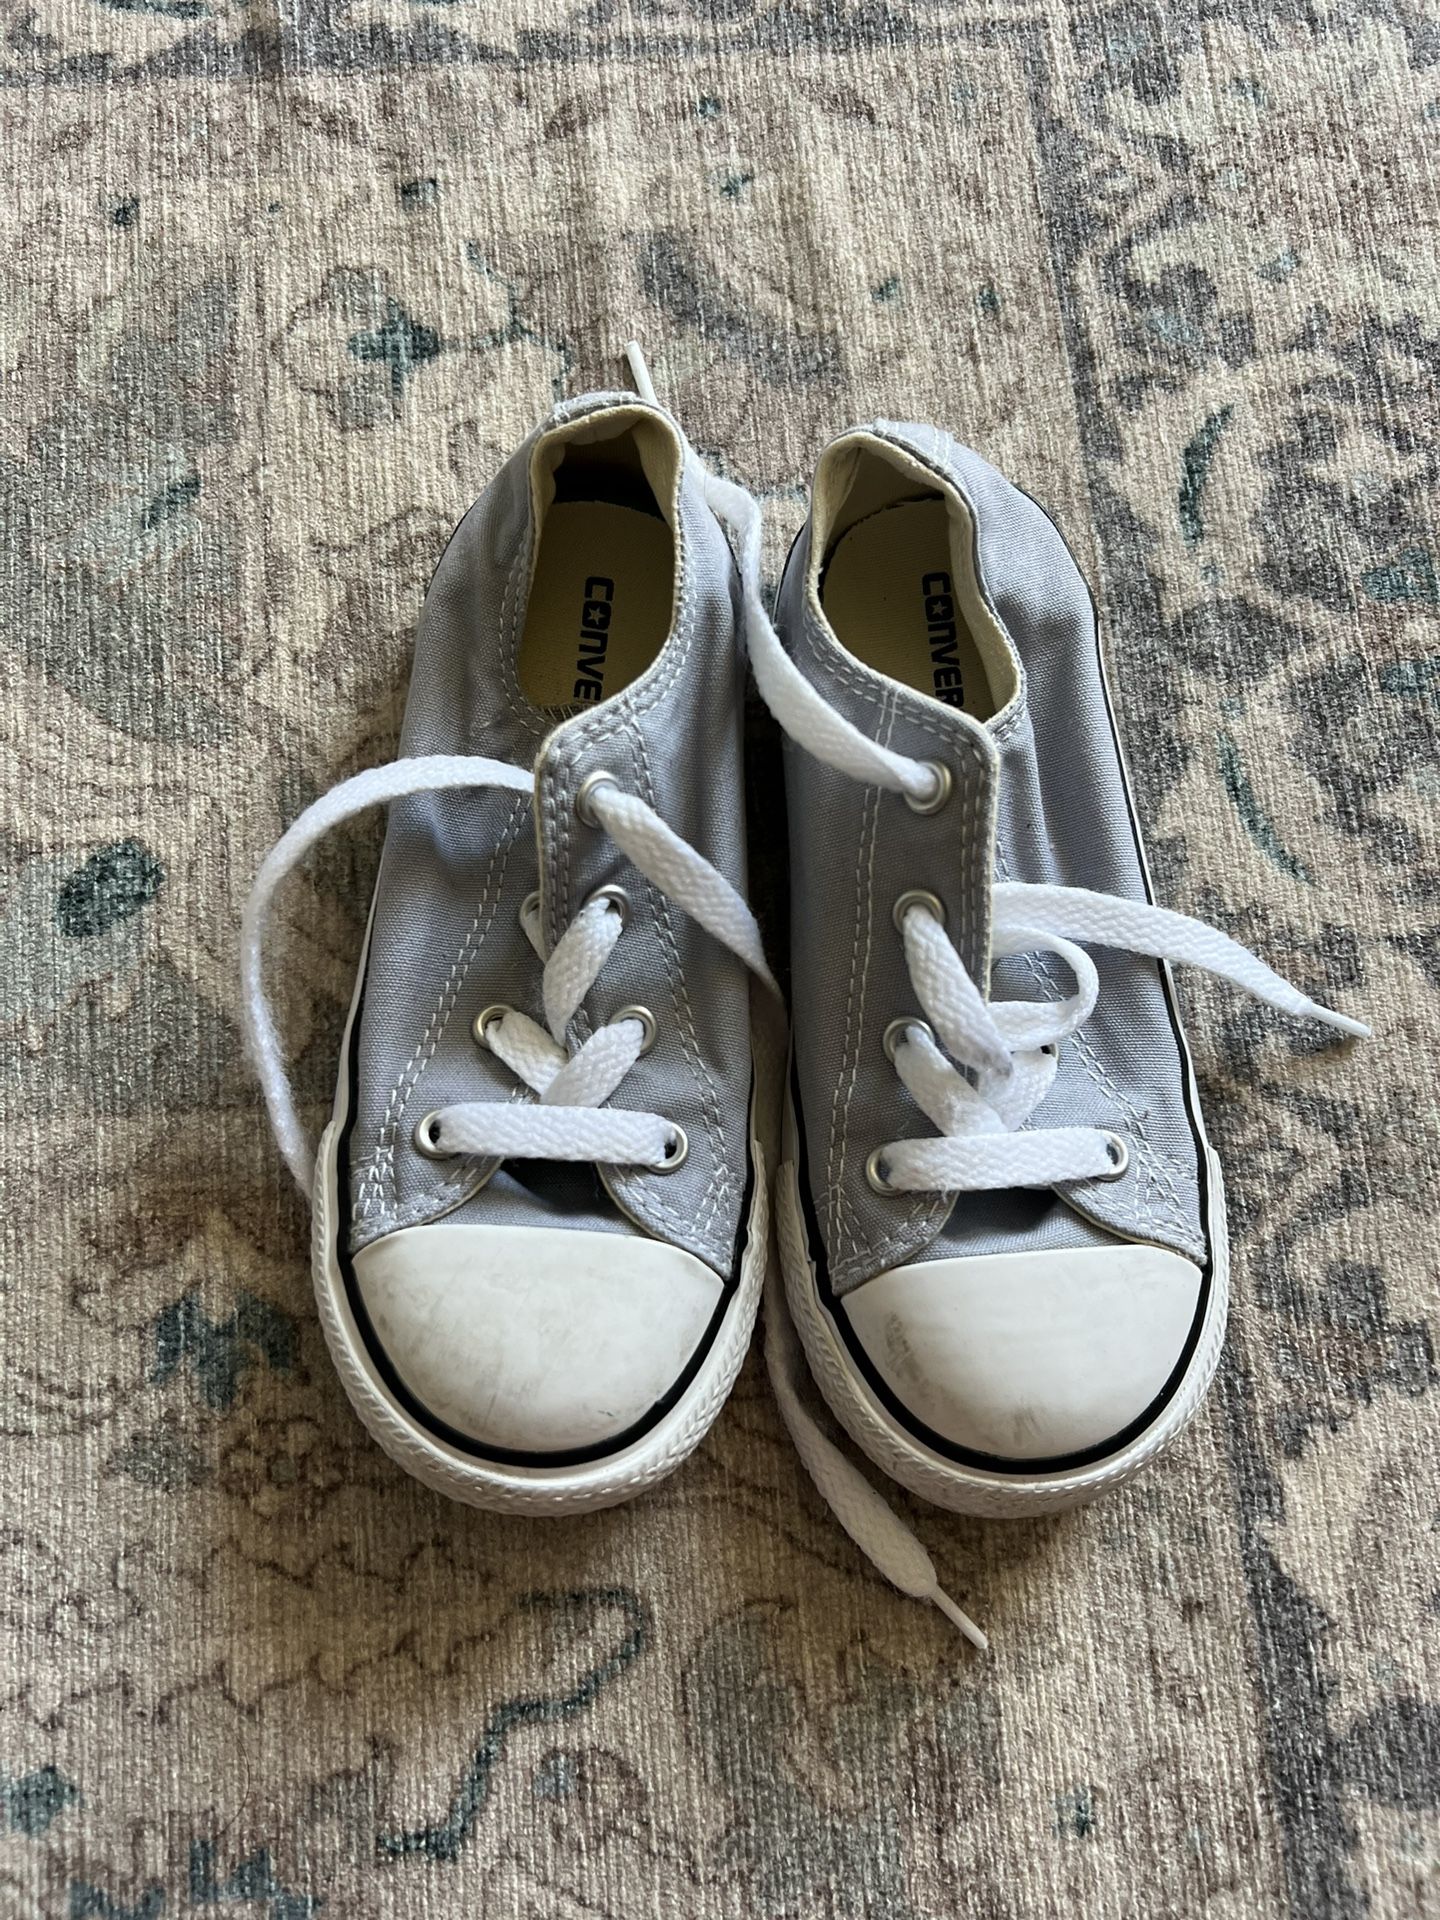 grey size 10 converse 